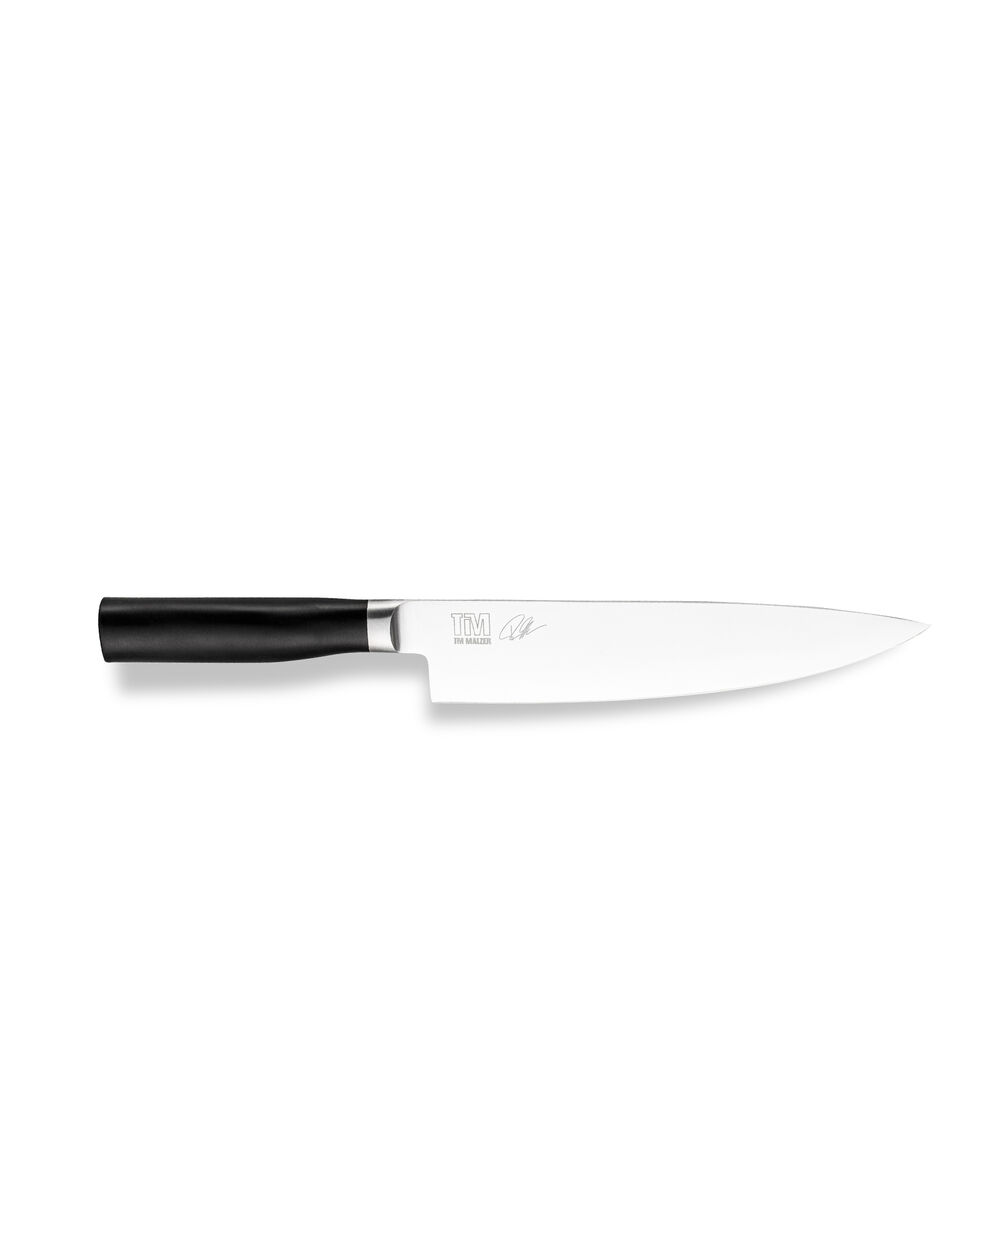 Нож поварской Шеф  KAI Камагата 20 см, кованая сталь, ручка пластик - фото 1